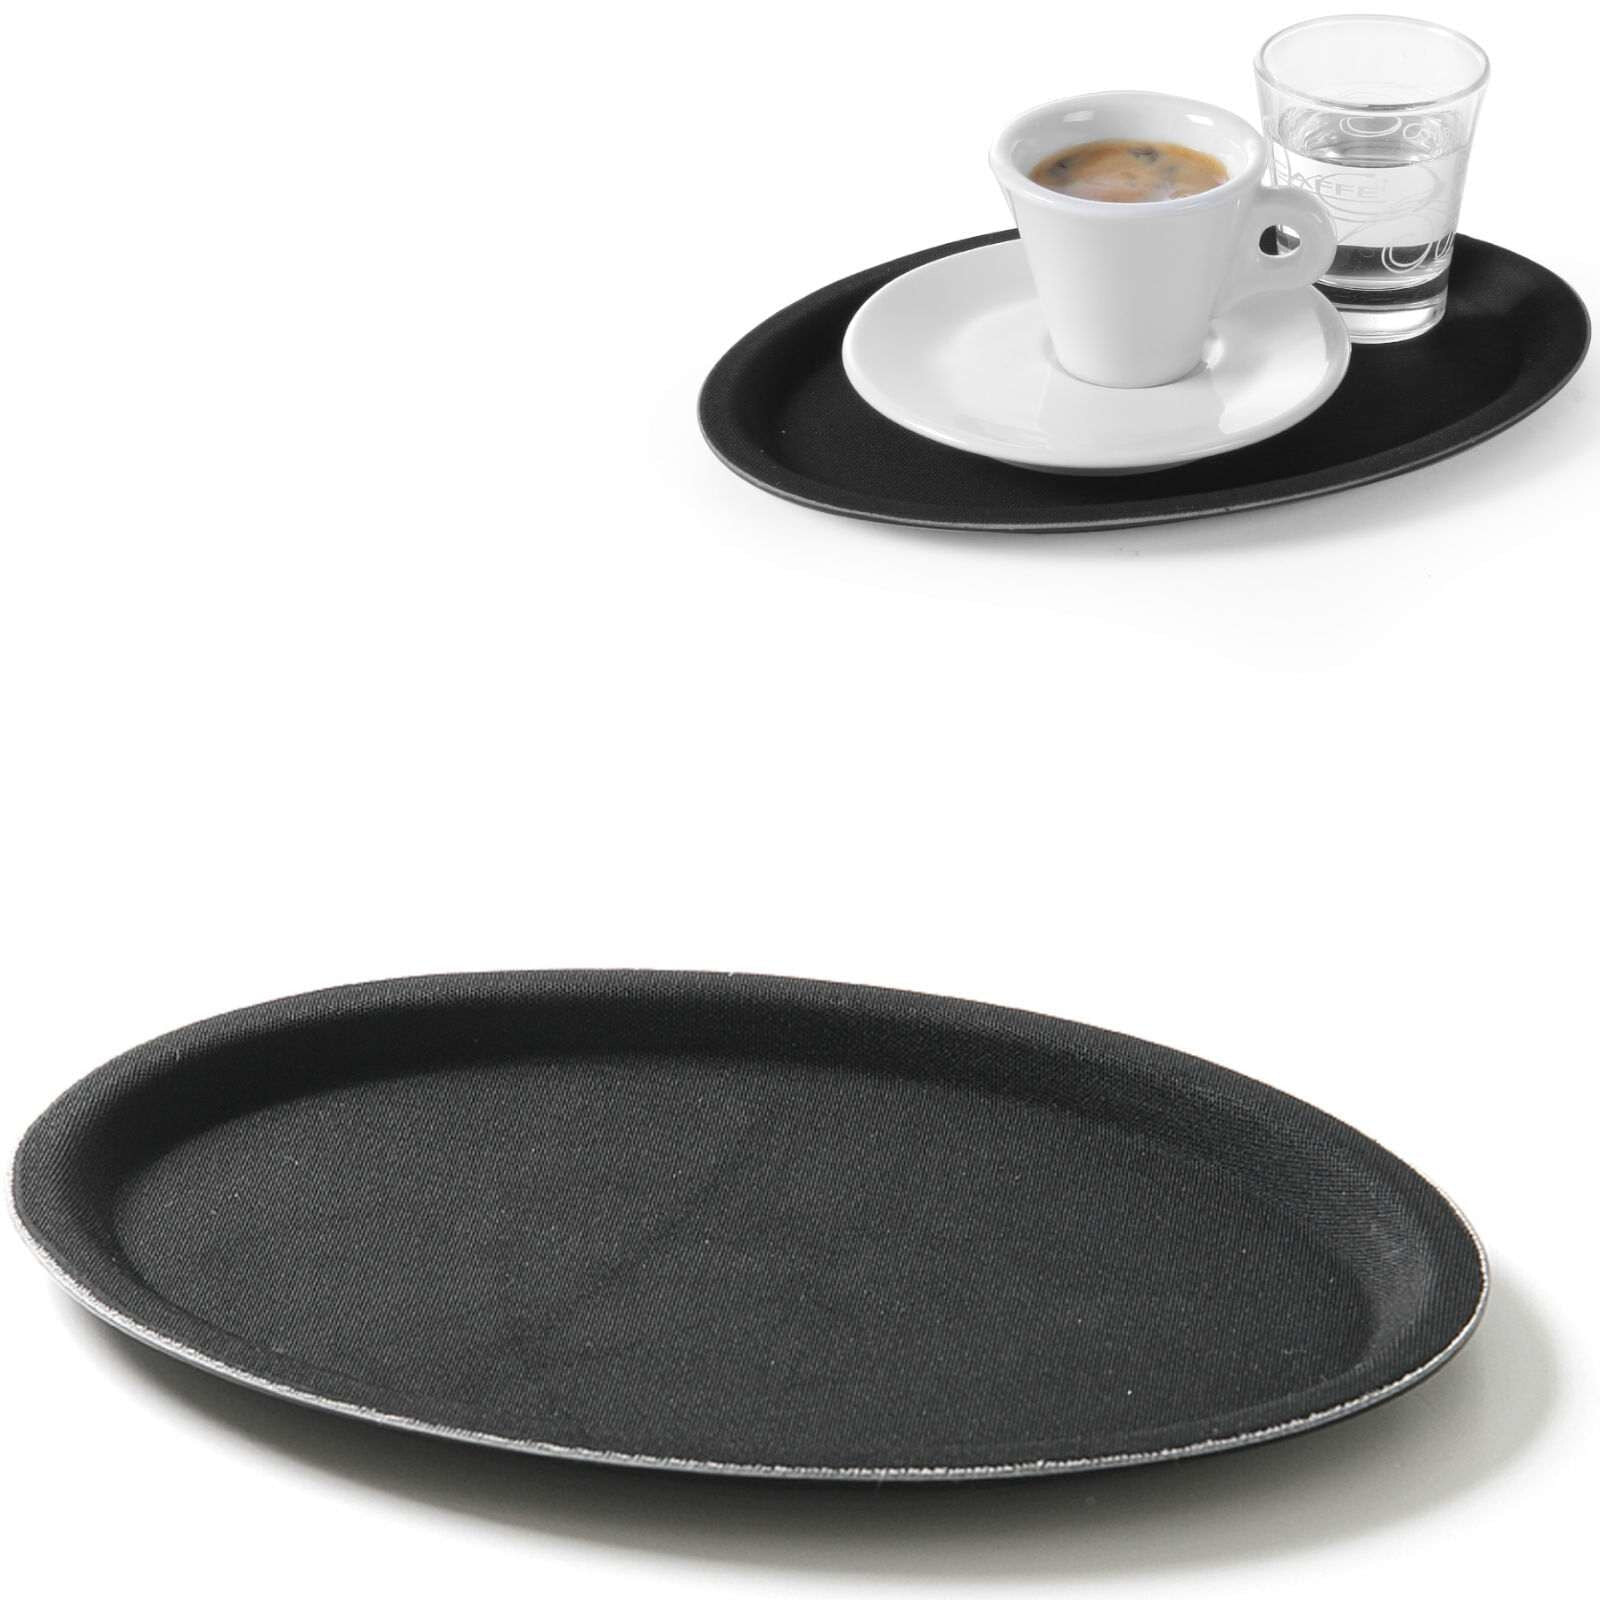 Non-slip oval waiter tray 21x29cm - black